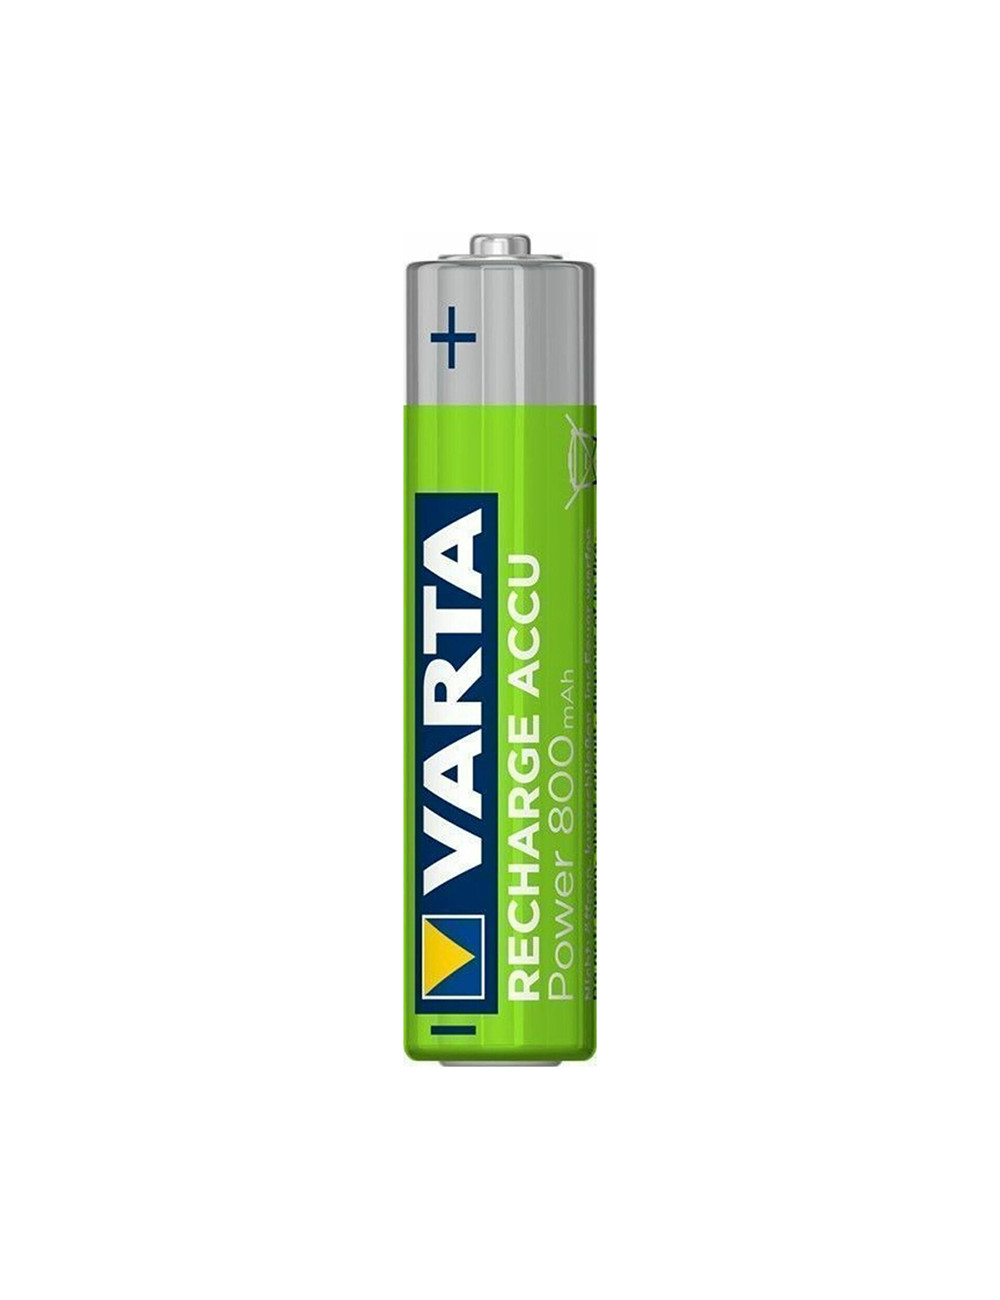 Pila AAA recargable 1,2V 800mAh Ni-Mh Varta Recharge Accu power (embalaje industrial) - V-56703 -  - 4008496550869 - 1